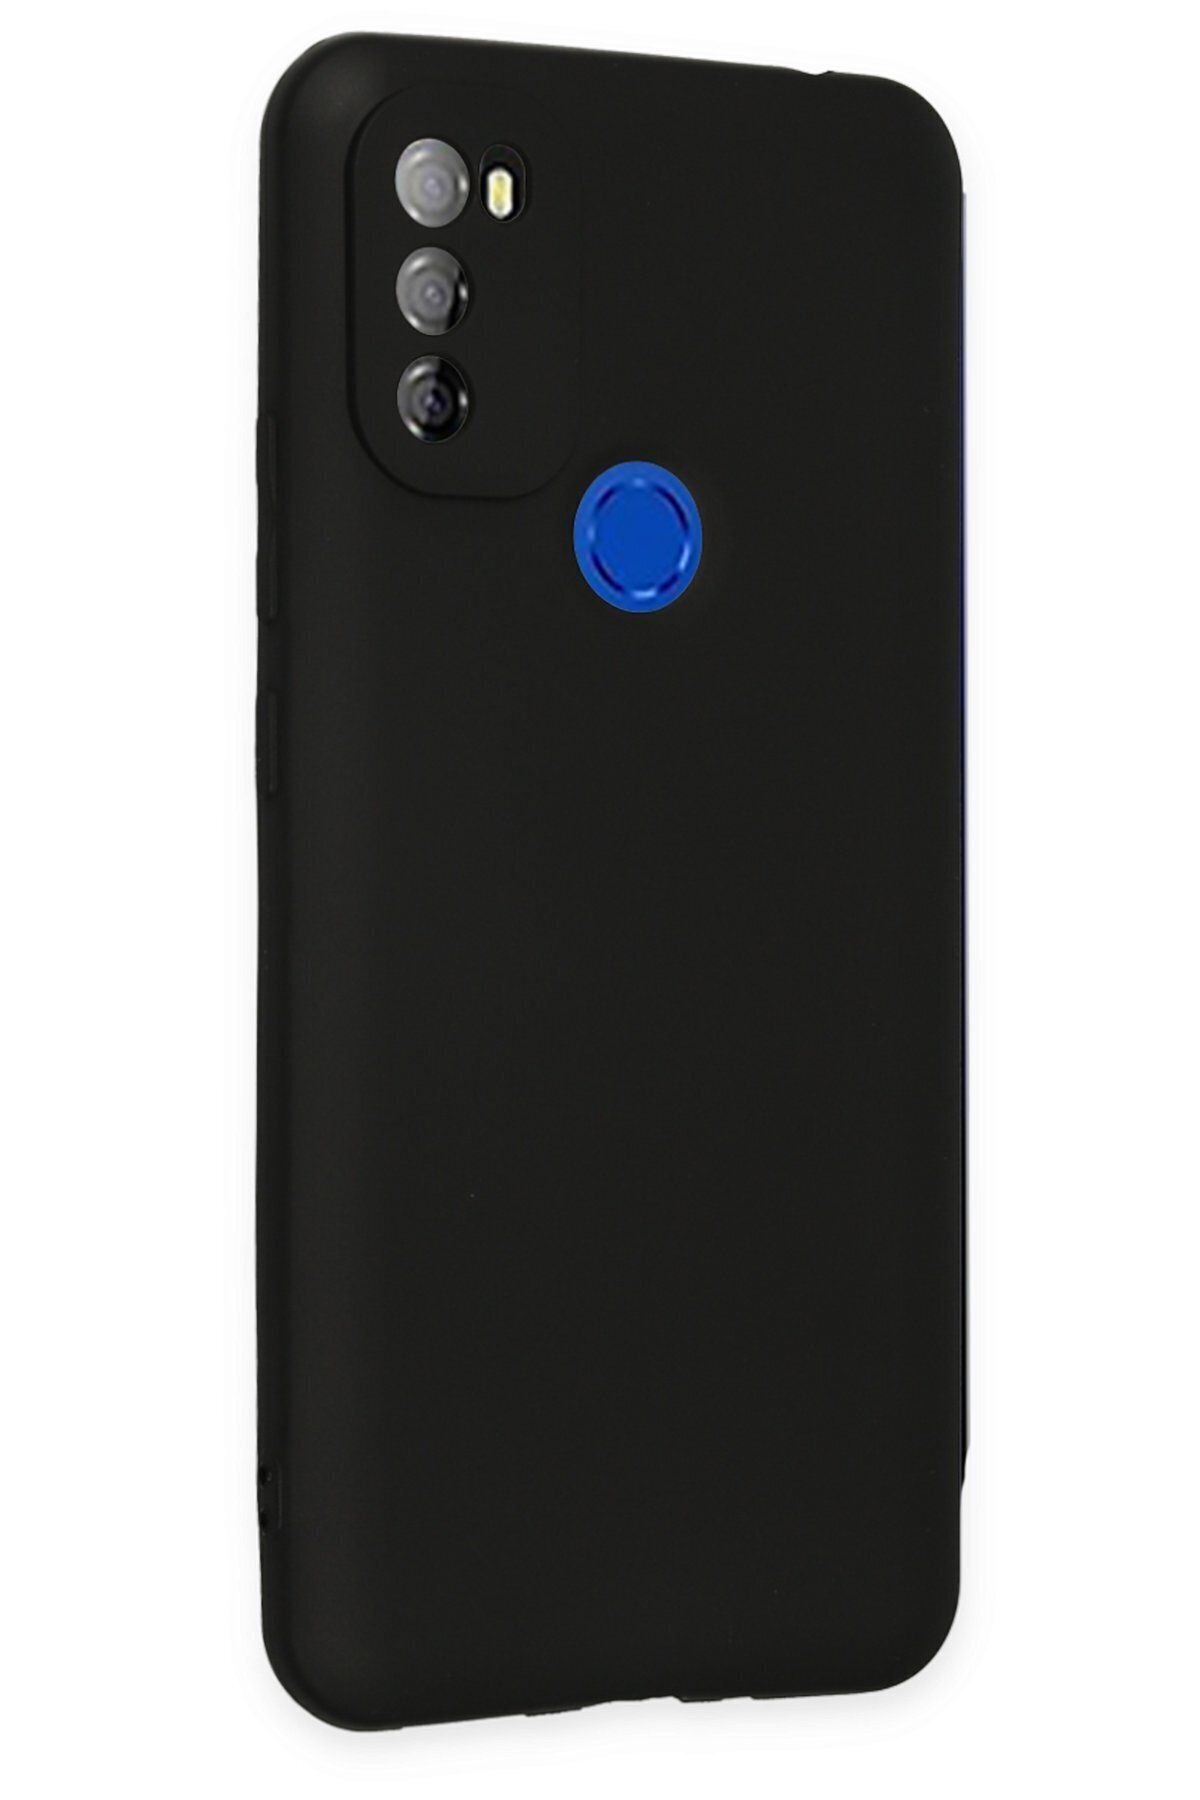 cepmoda Reeder P13 Blue Max Pro 256GB - Ultra İnce Telefon Kılıfı - Siyah Renk Soft Slim Esnek Kapak